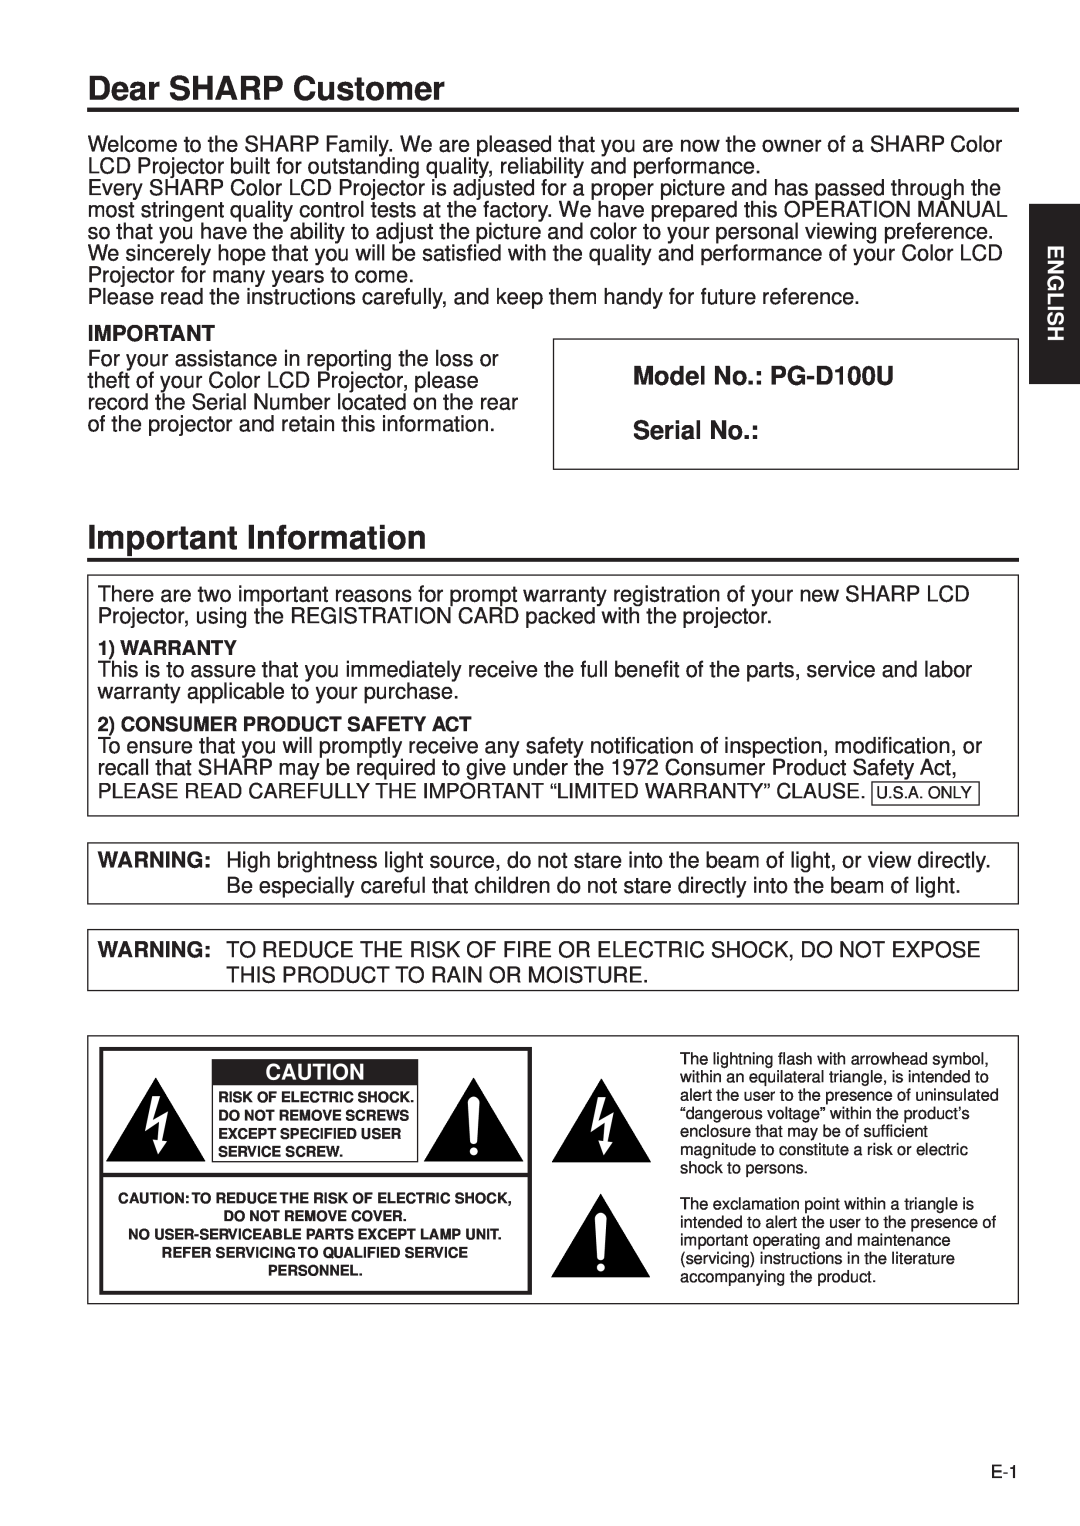 Sharp operation manual Dear SHARP Customer, Important Information, Model No. PG-D100U, Serial No, English 